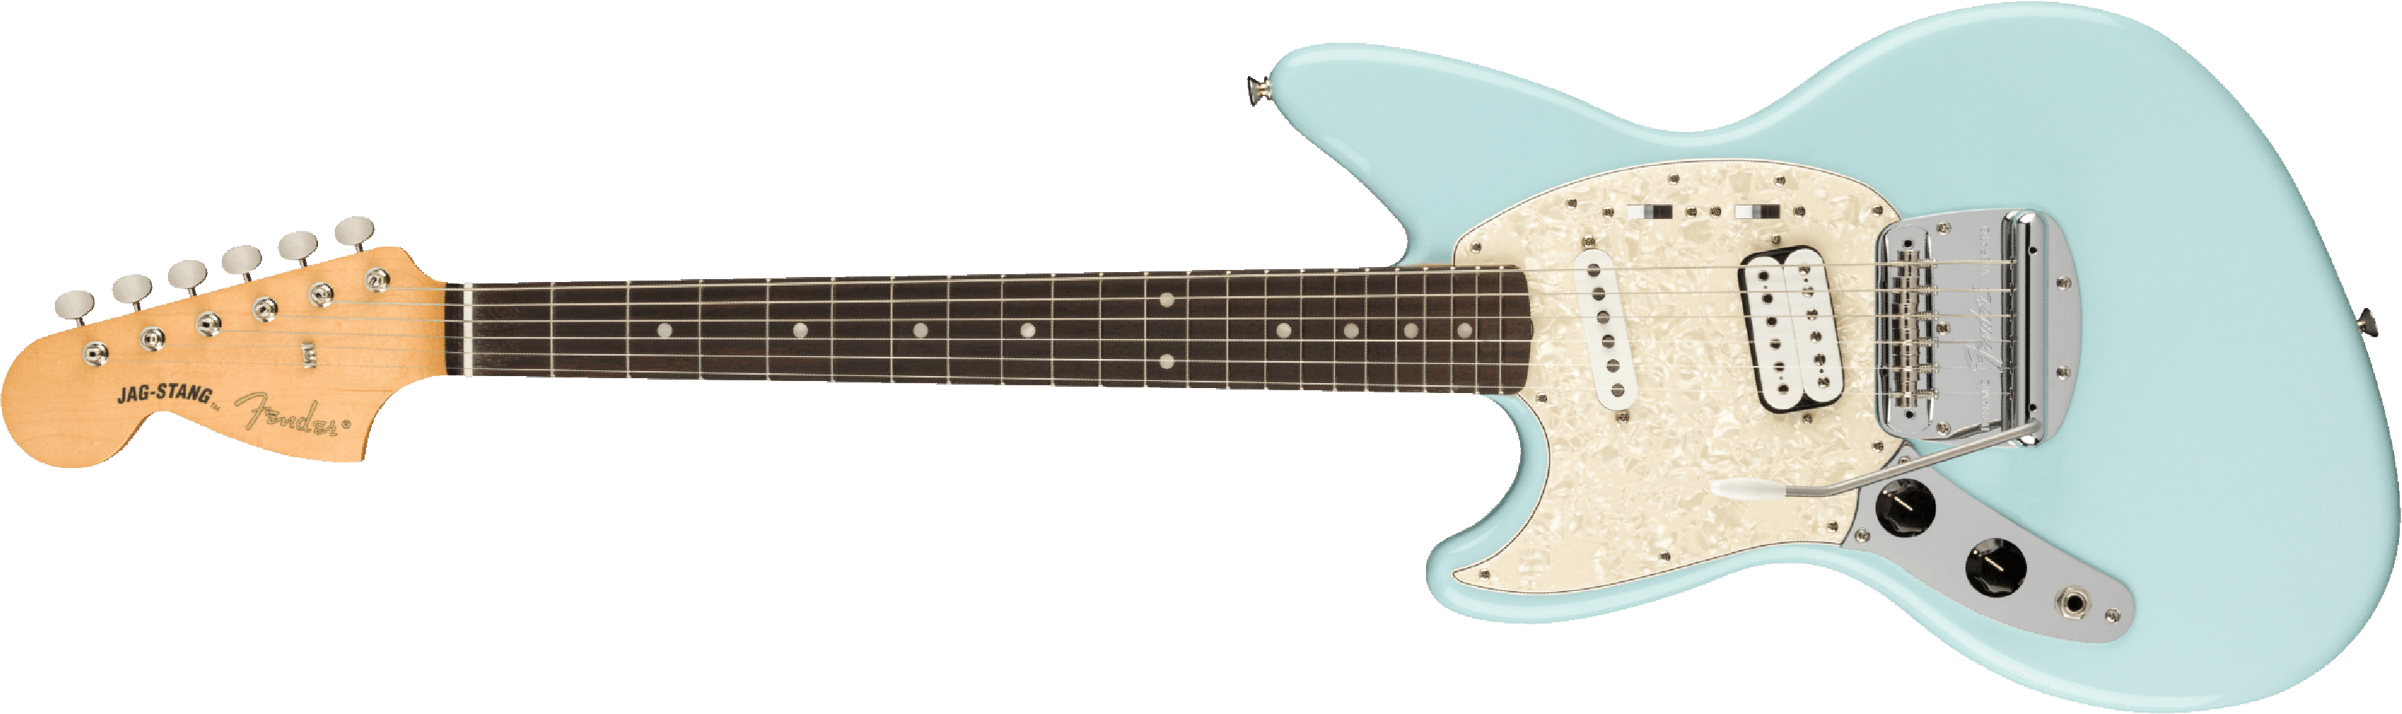 Fender Jag-stang Kurt Cobain Artist Gaucher Hs Trem Rw - Sonic Blue - Guitarra electrica para zurdos - Main picture